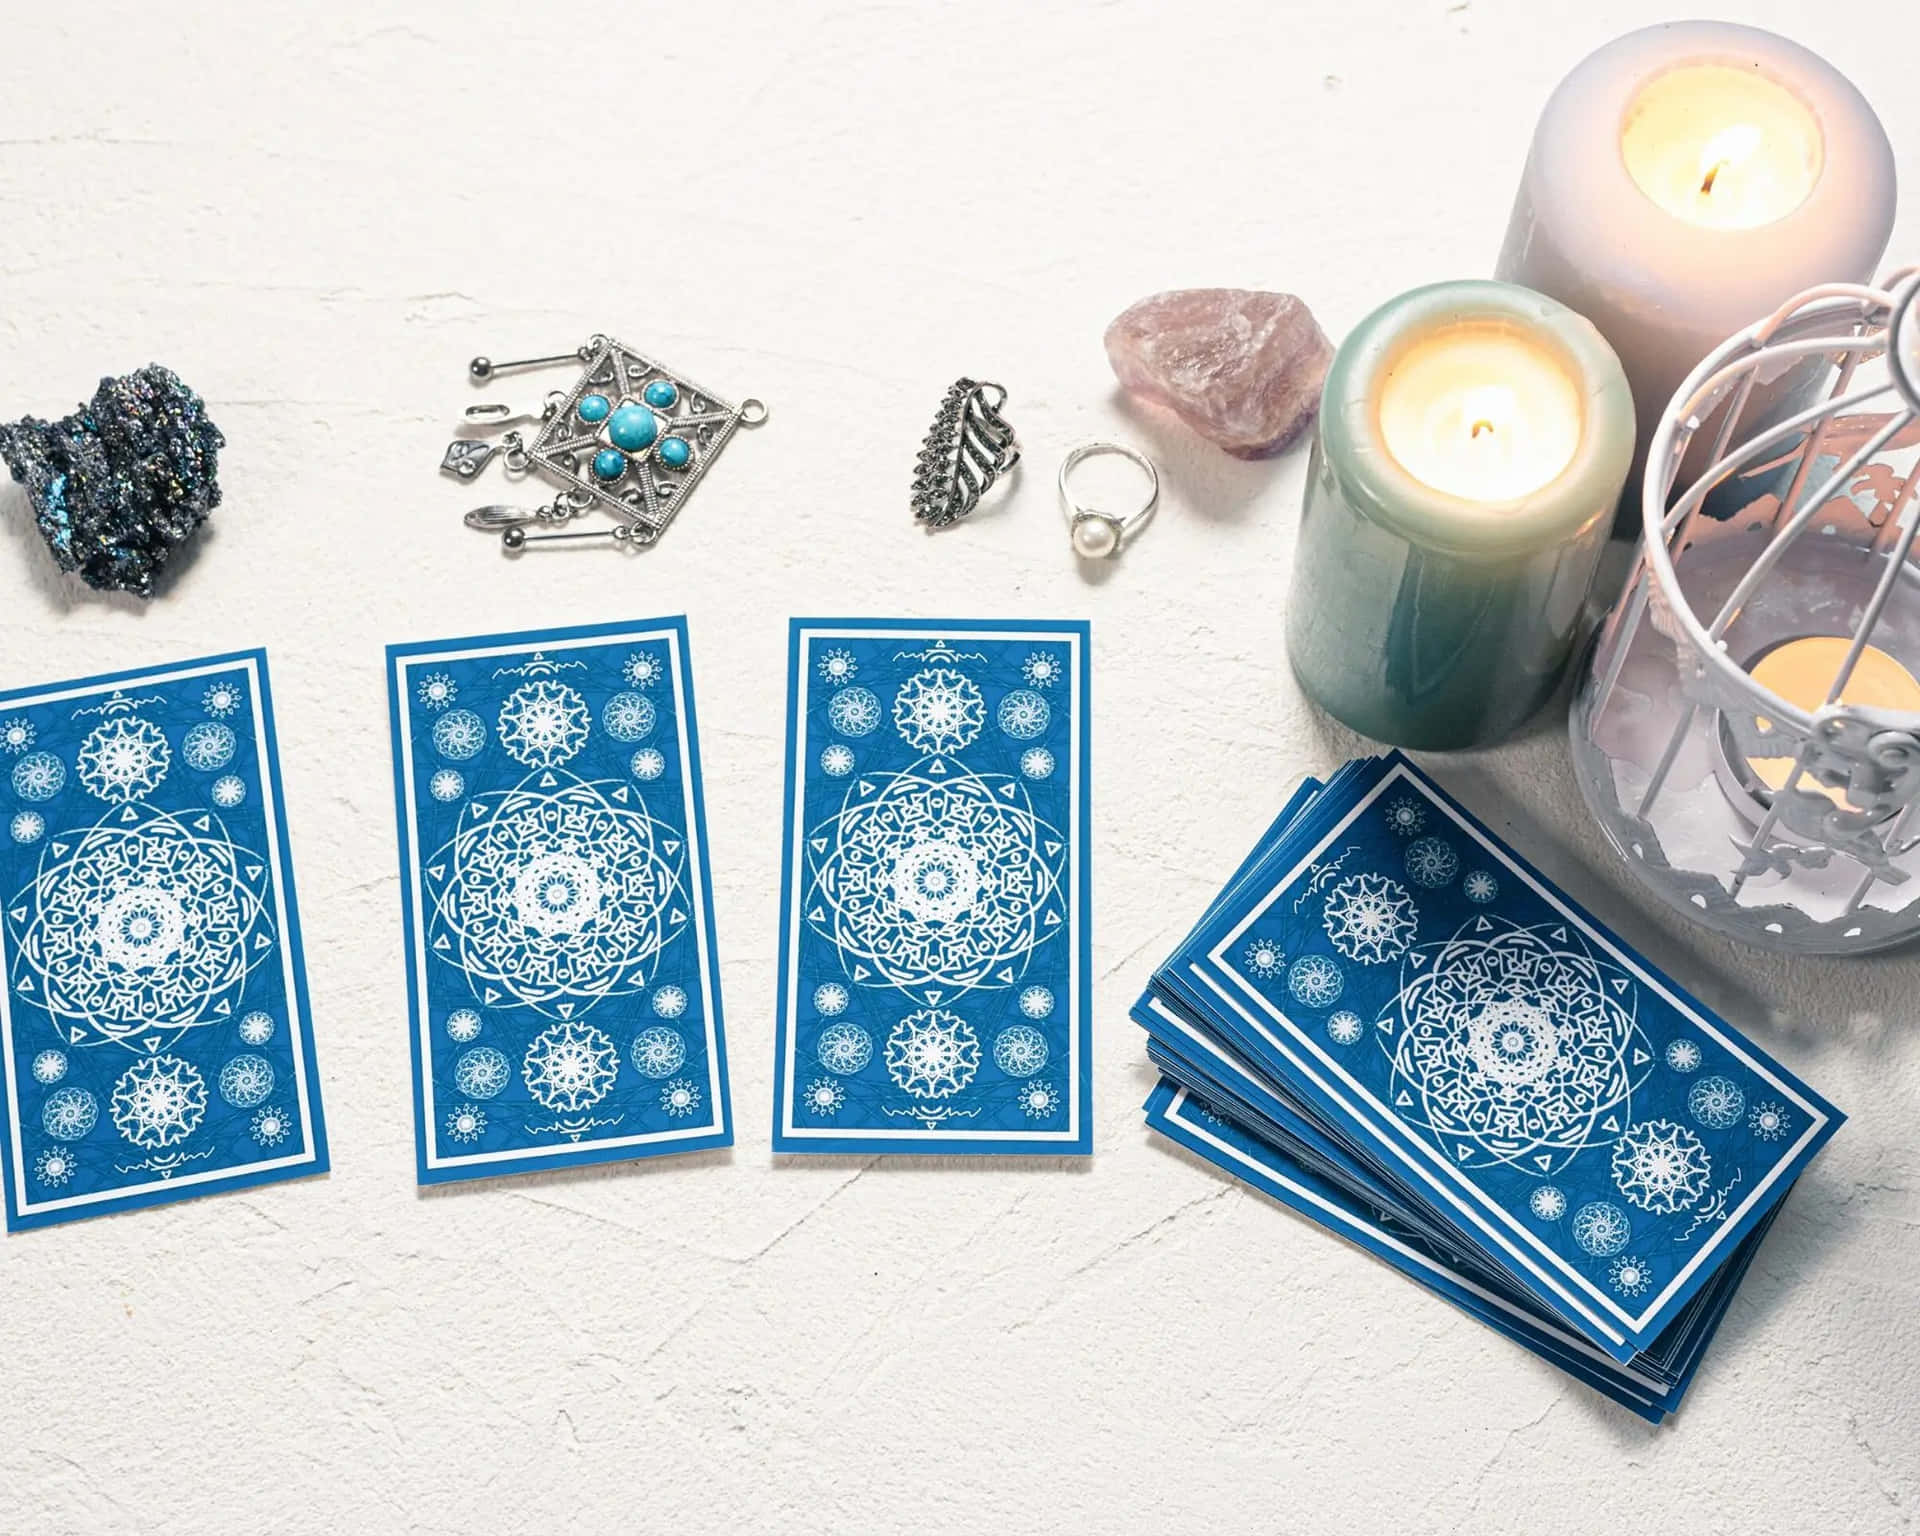 Stunning tarot card spread on mystical background